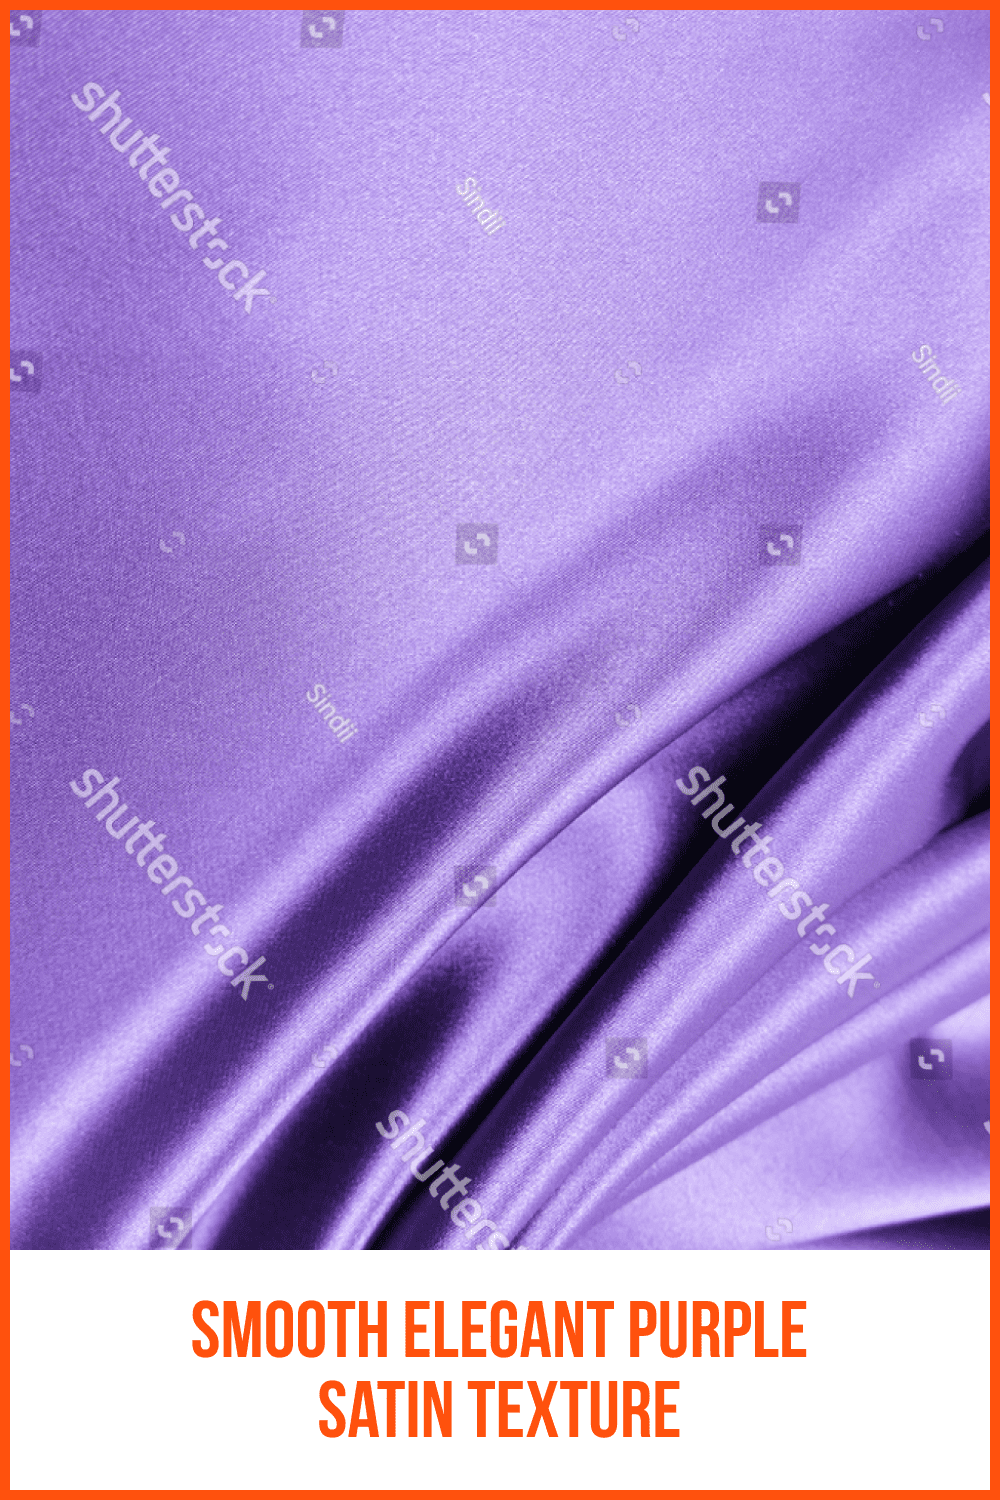 Smooth Elegant Purple Satin Texture.